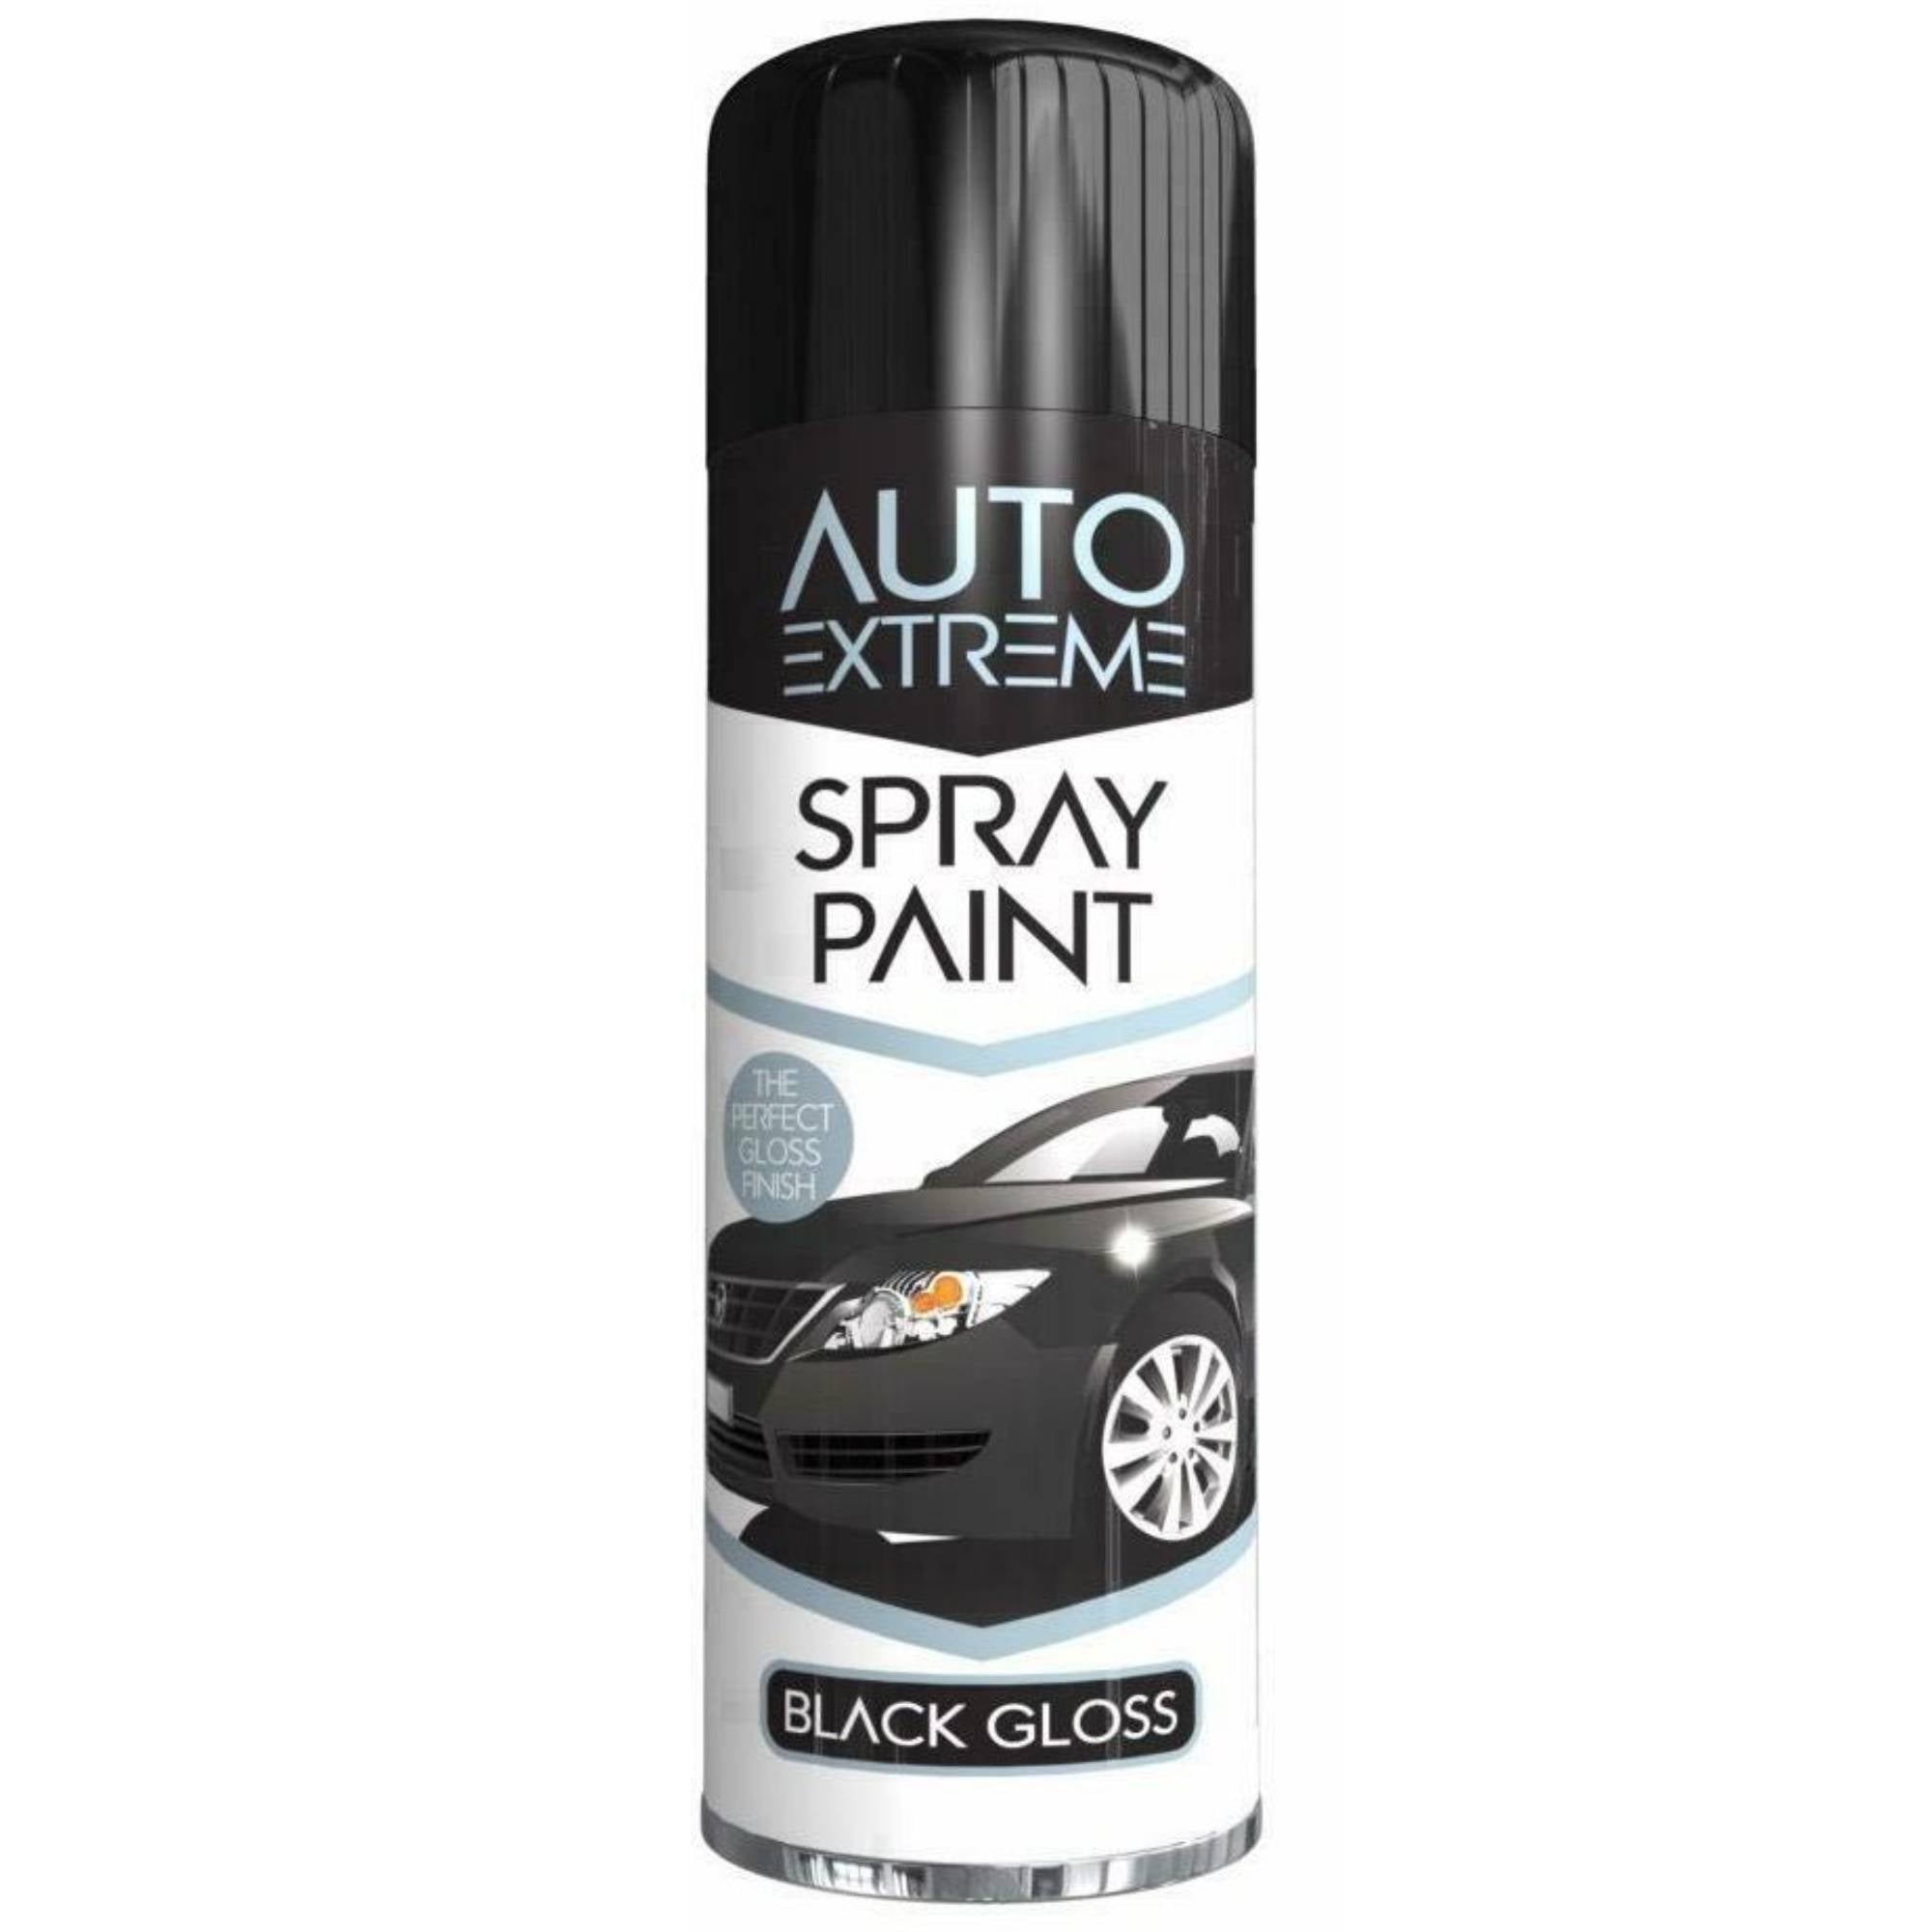 Auto Extreme Black Gloss Spray Paint 250ml